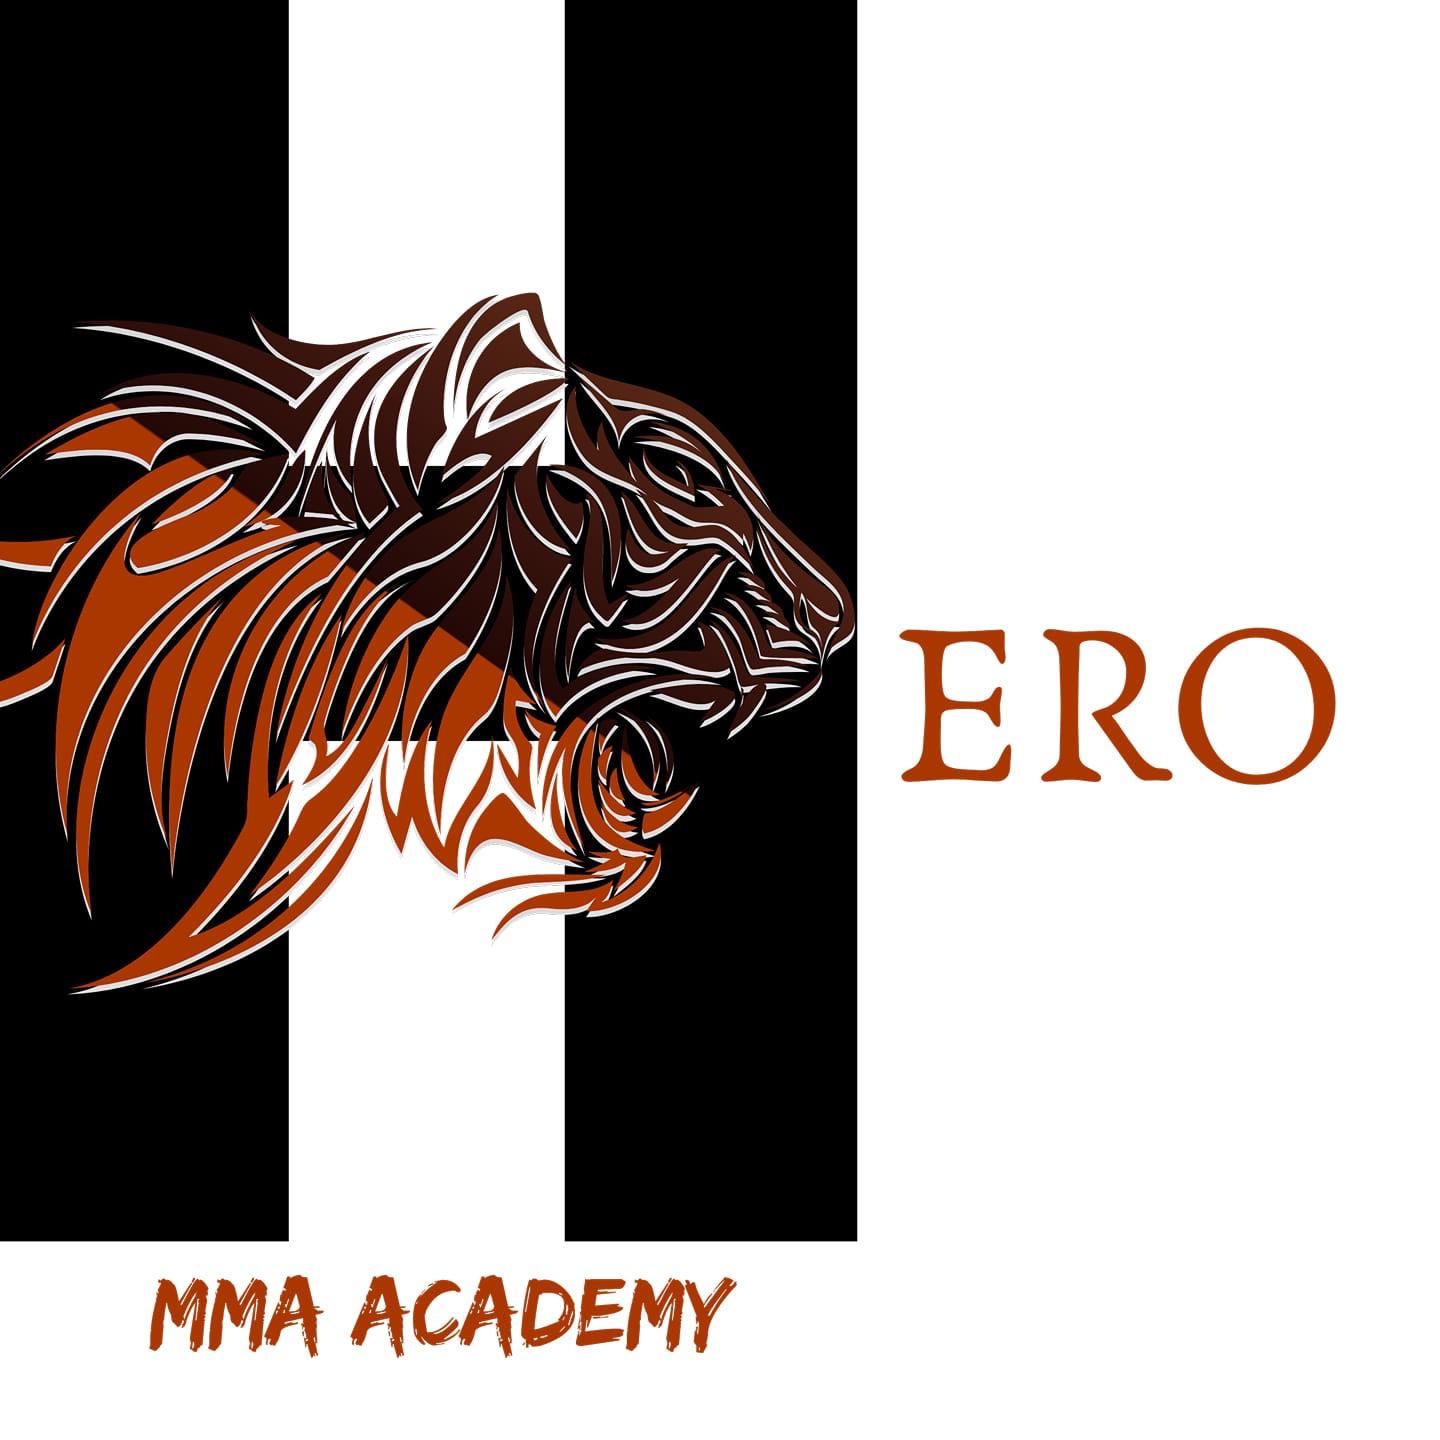 Hero MMA Academy Logo